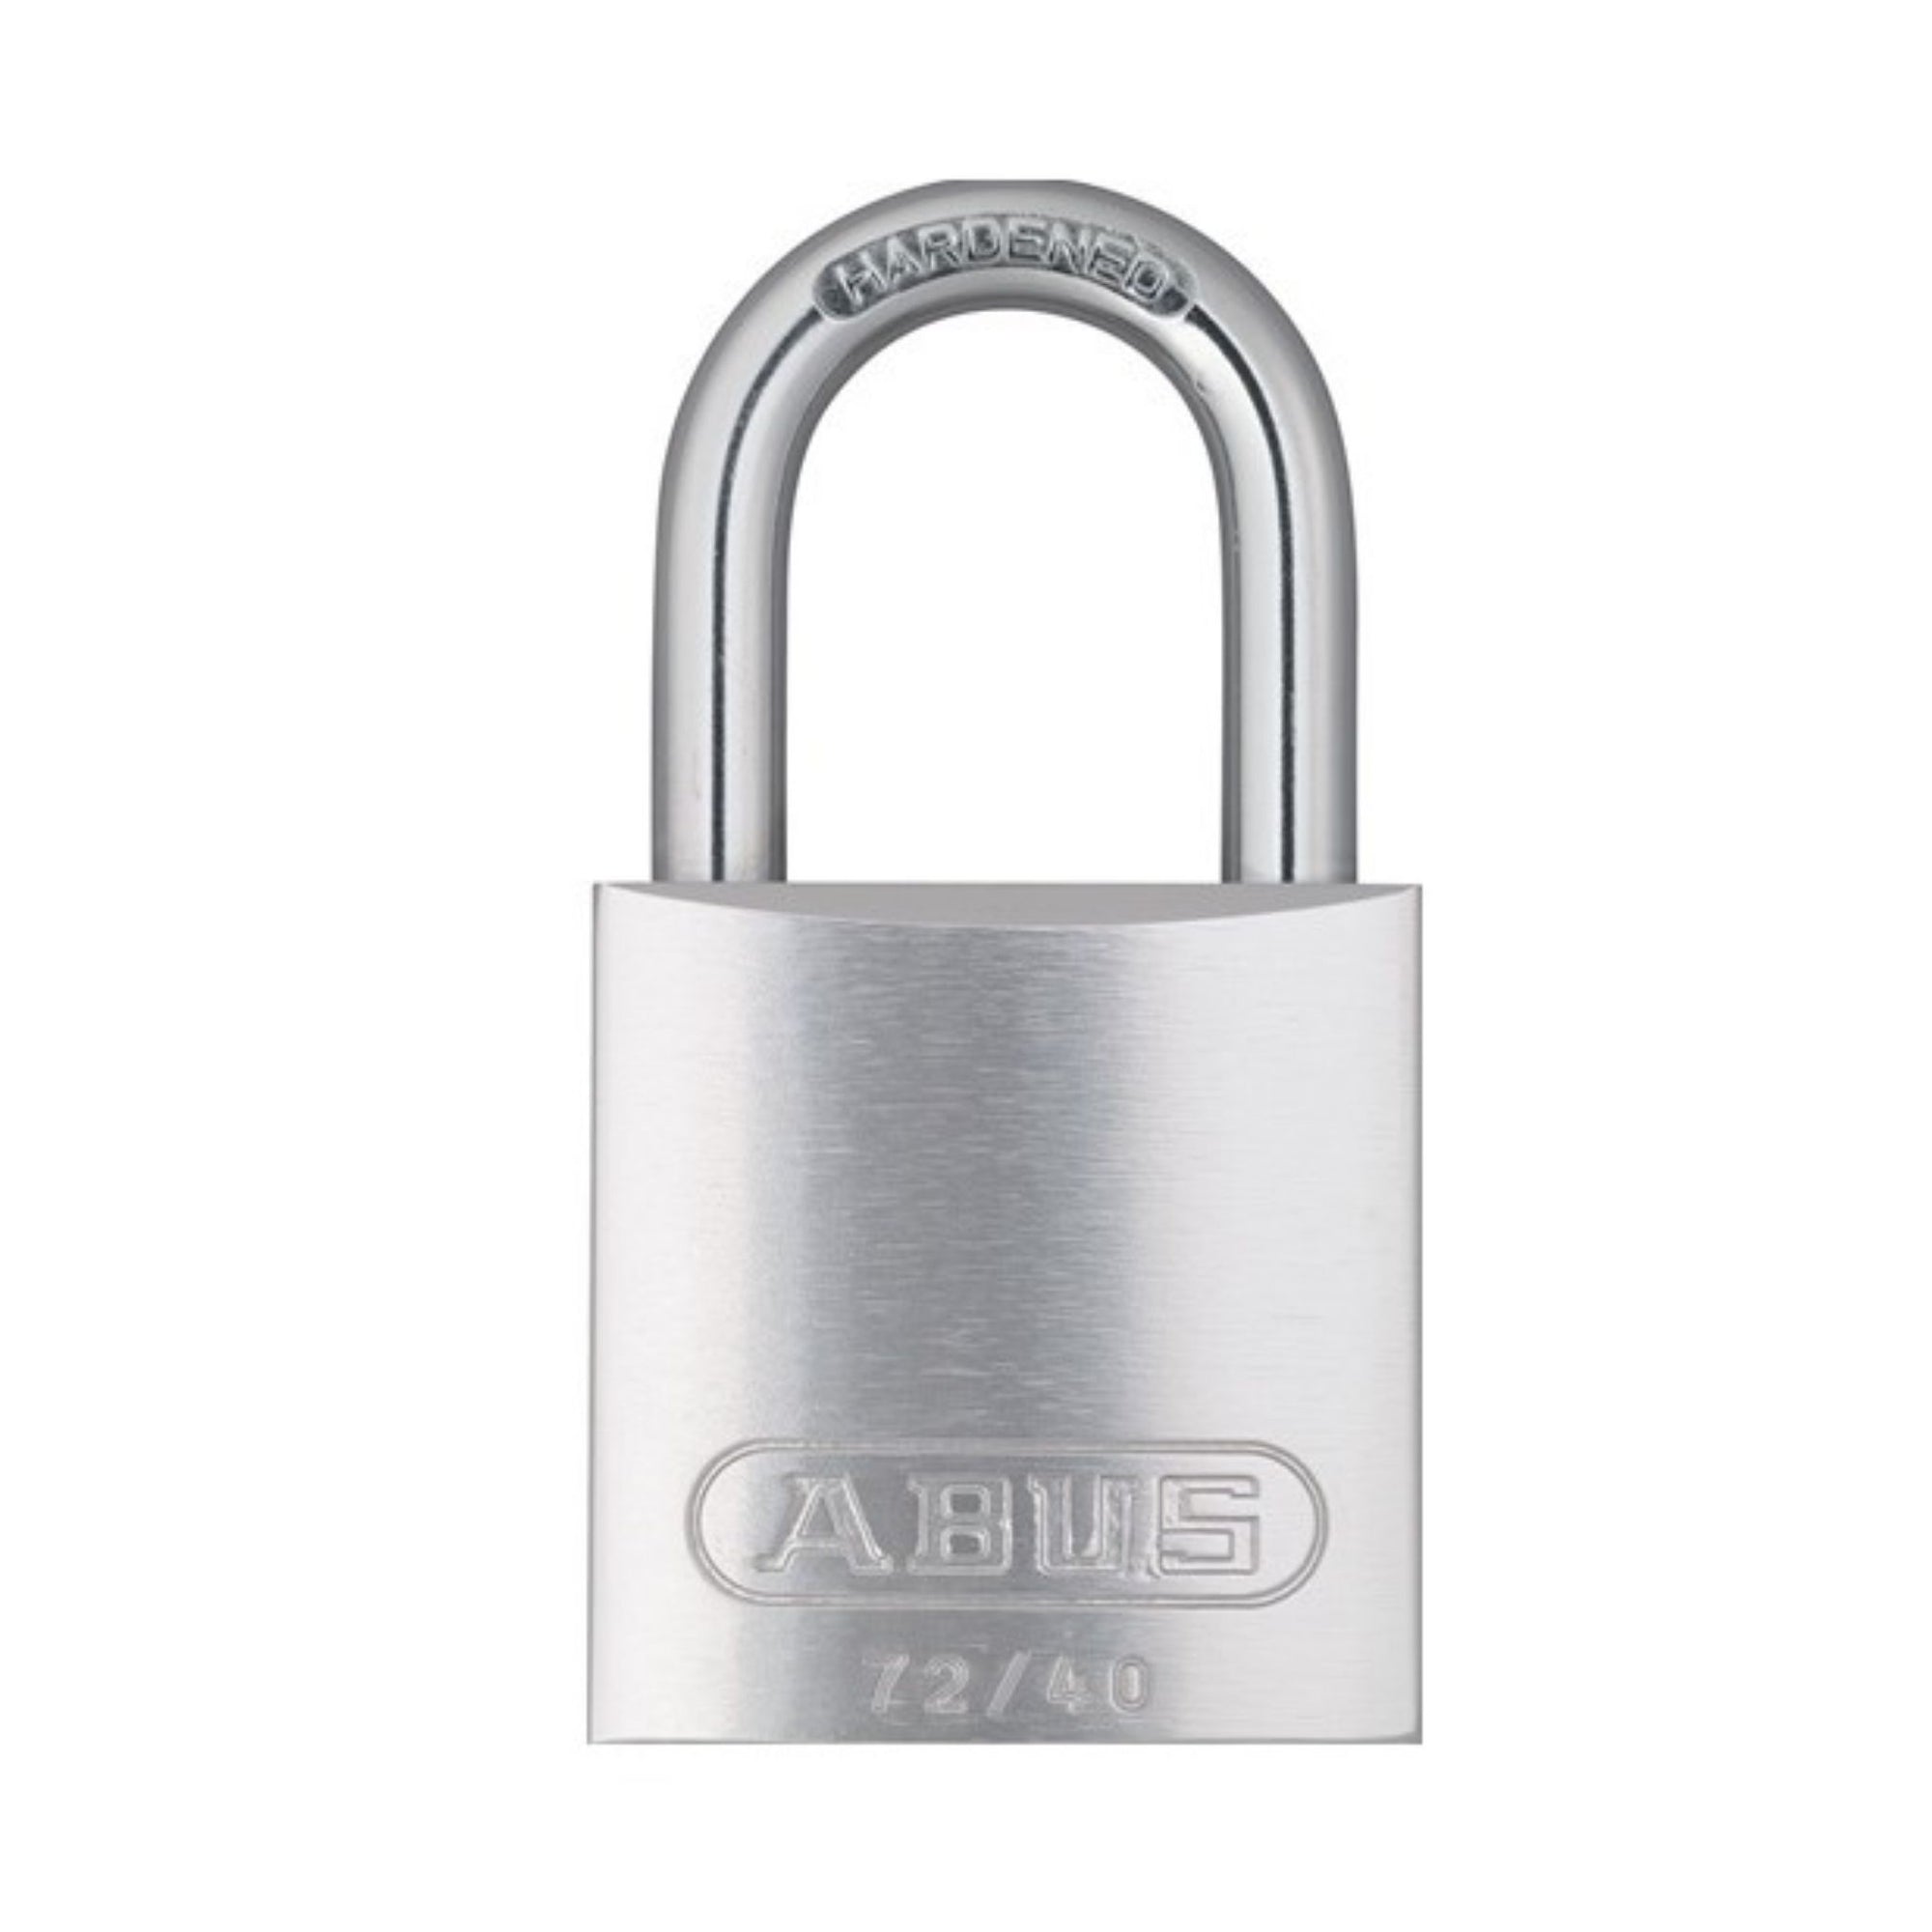 Abus 72/40 KA TT00036 Silver Titalium Safety Padlock with 1-Inch Shackle, Keyed Alike to Match Existing Key Number KATT00036 - The Lock Source 